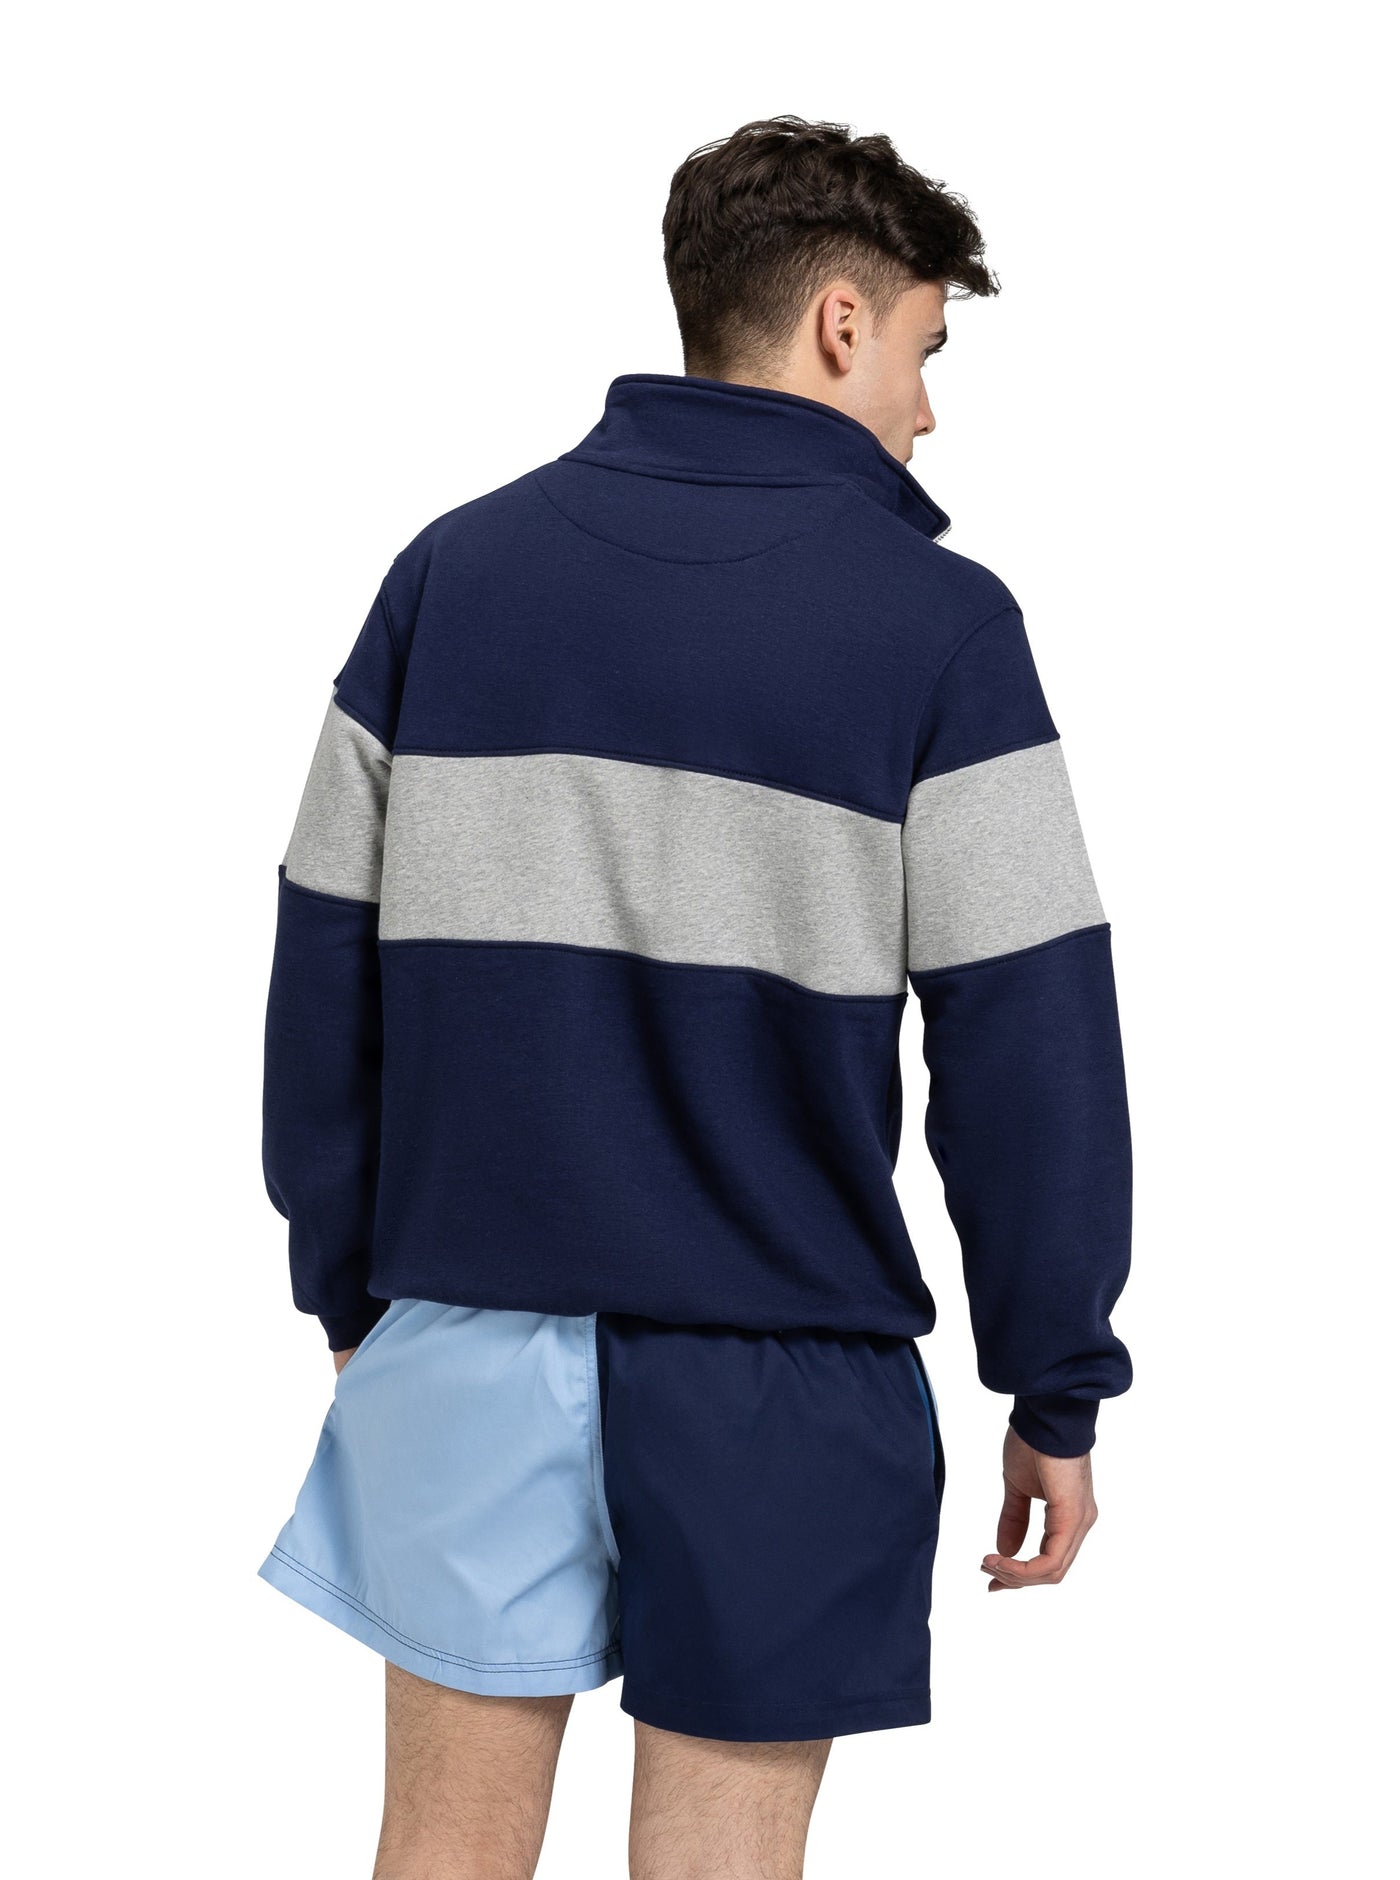 Unisex Harlequin Shorts - Blue and Navy